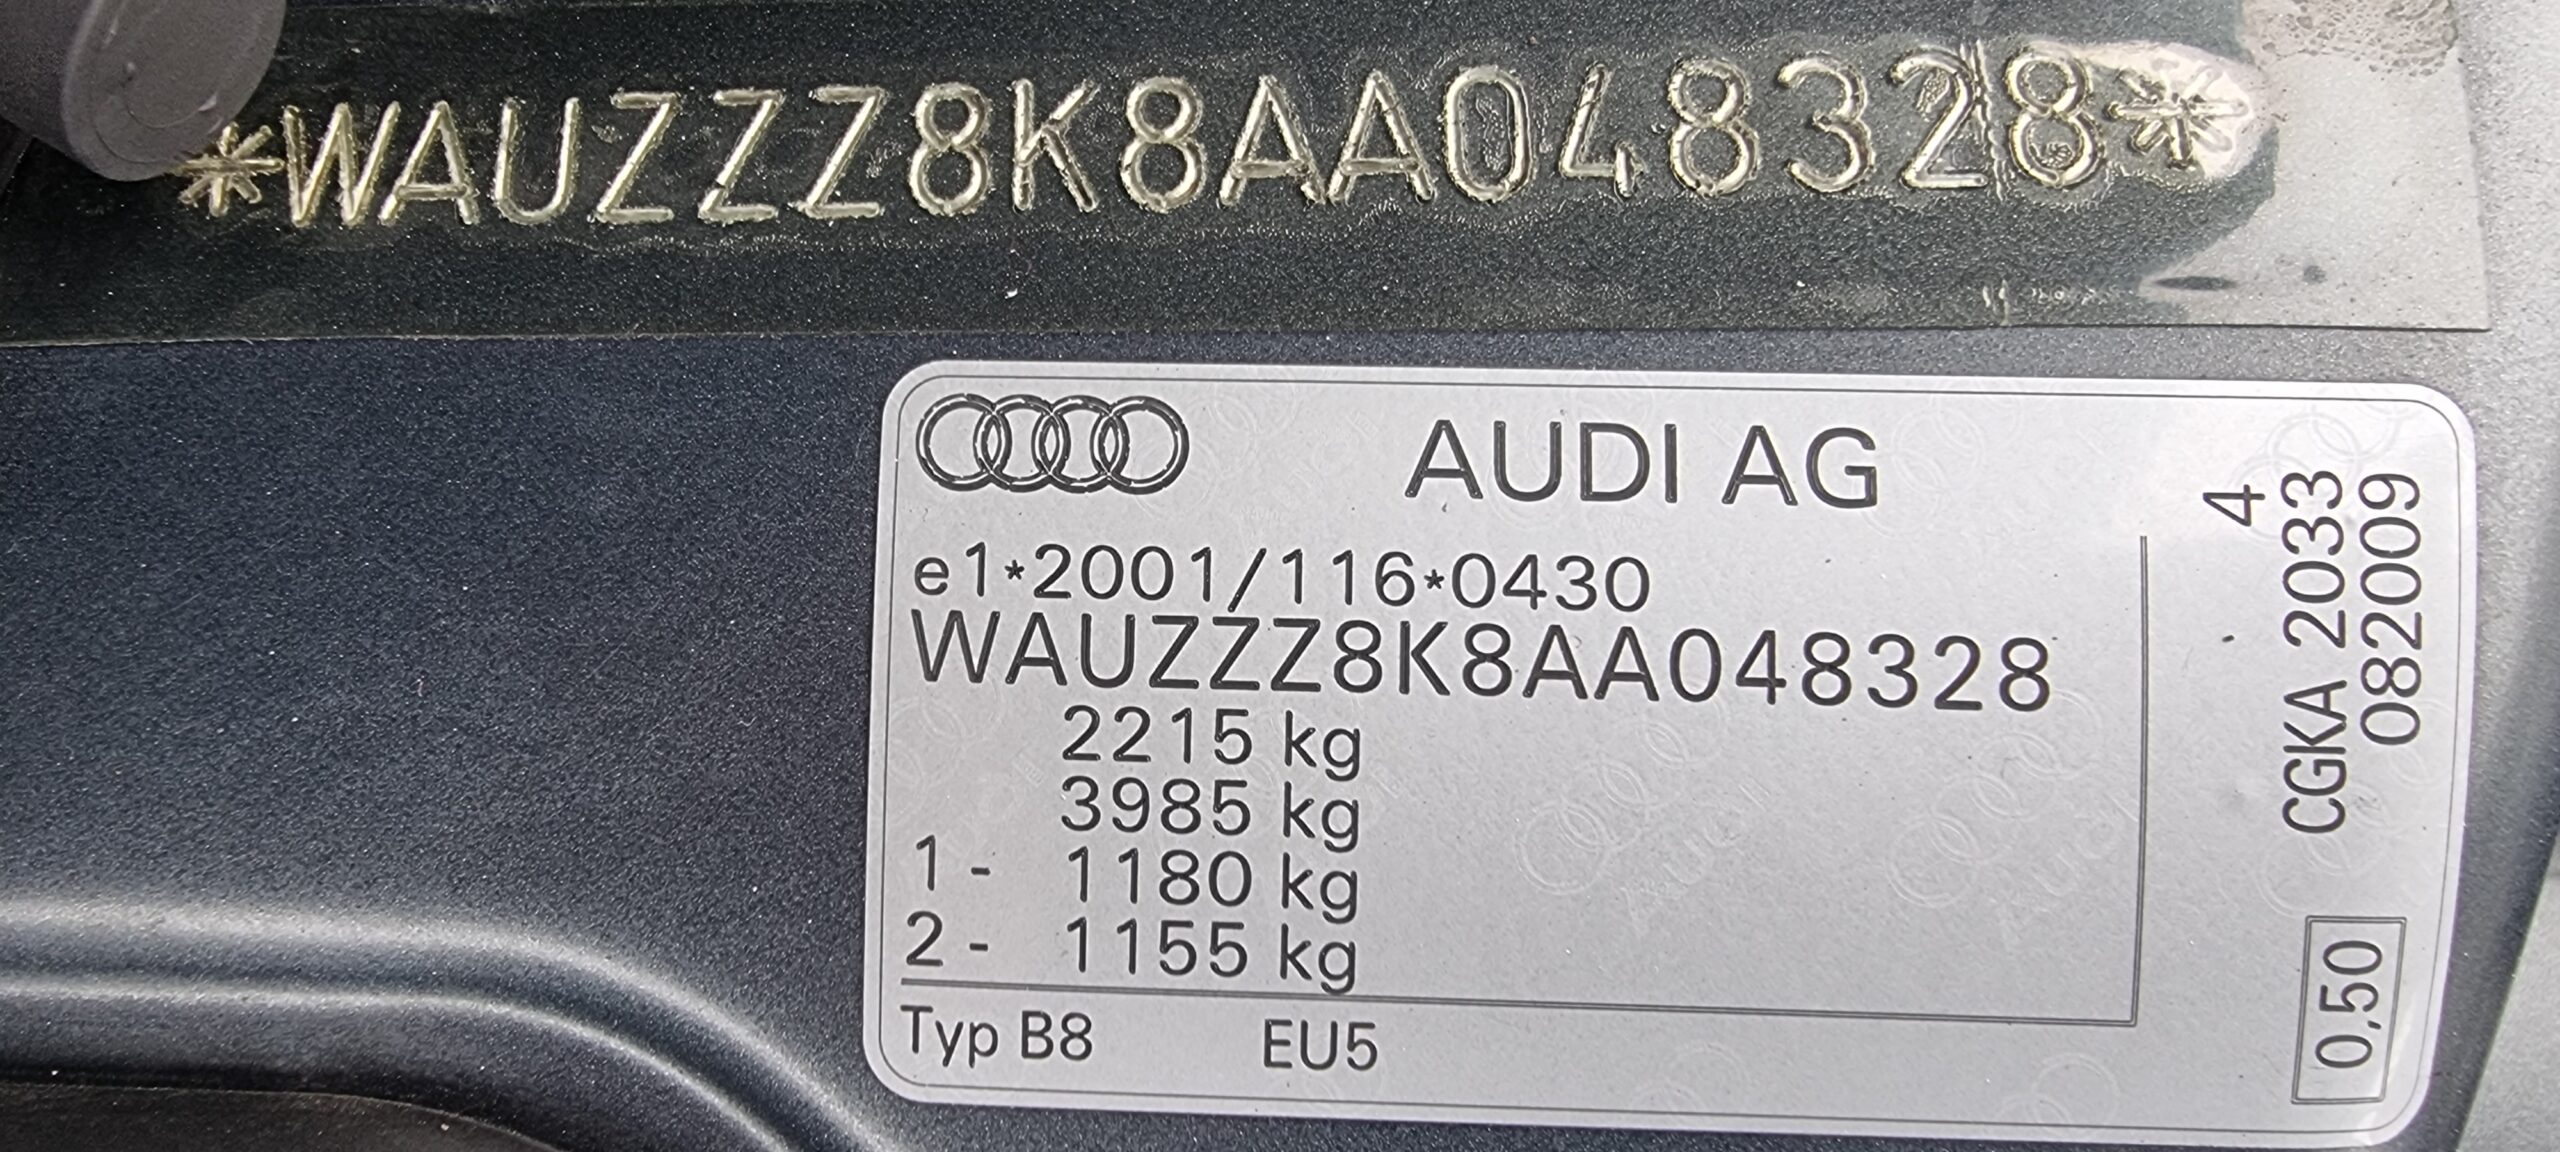 AUDI A4 AUTOMAT, 2.7 TDI, 190 CP, EURO 5, AN 2010